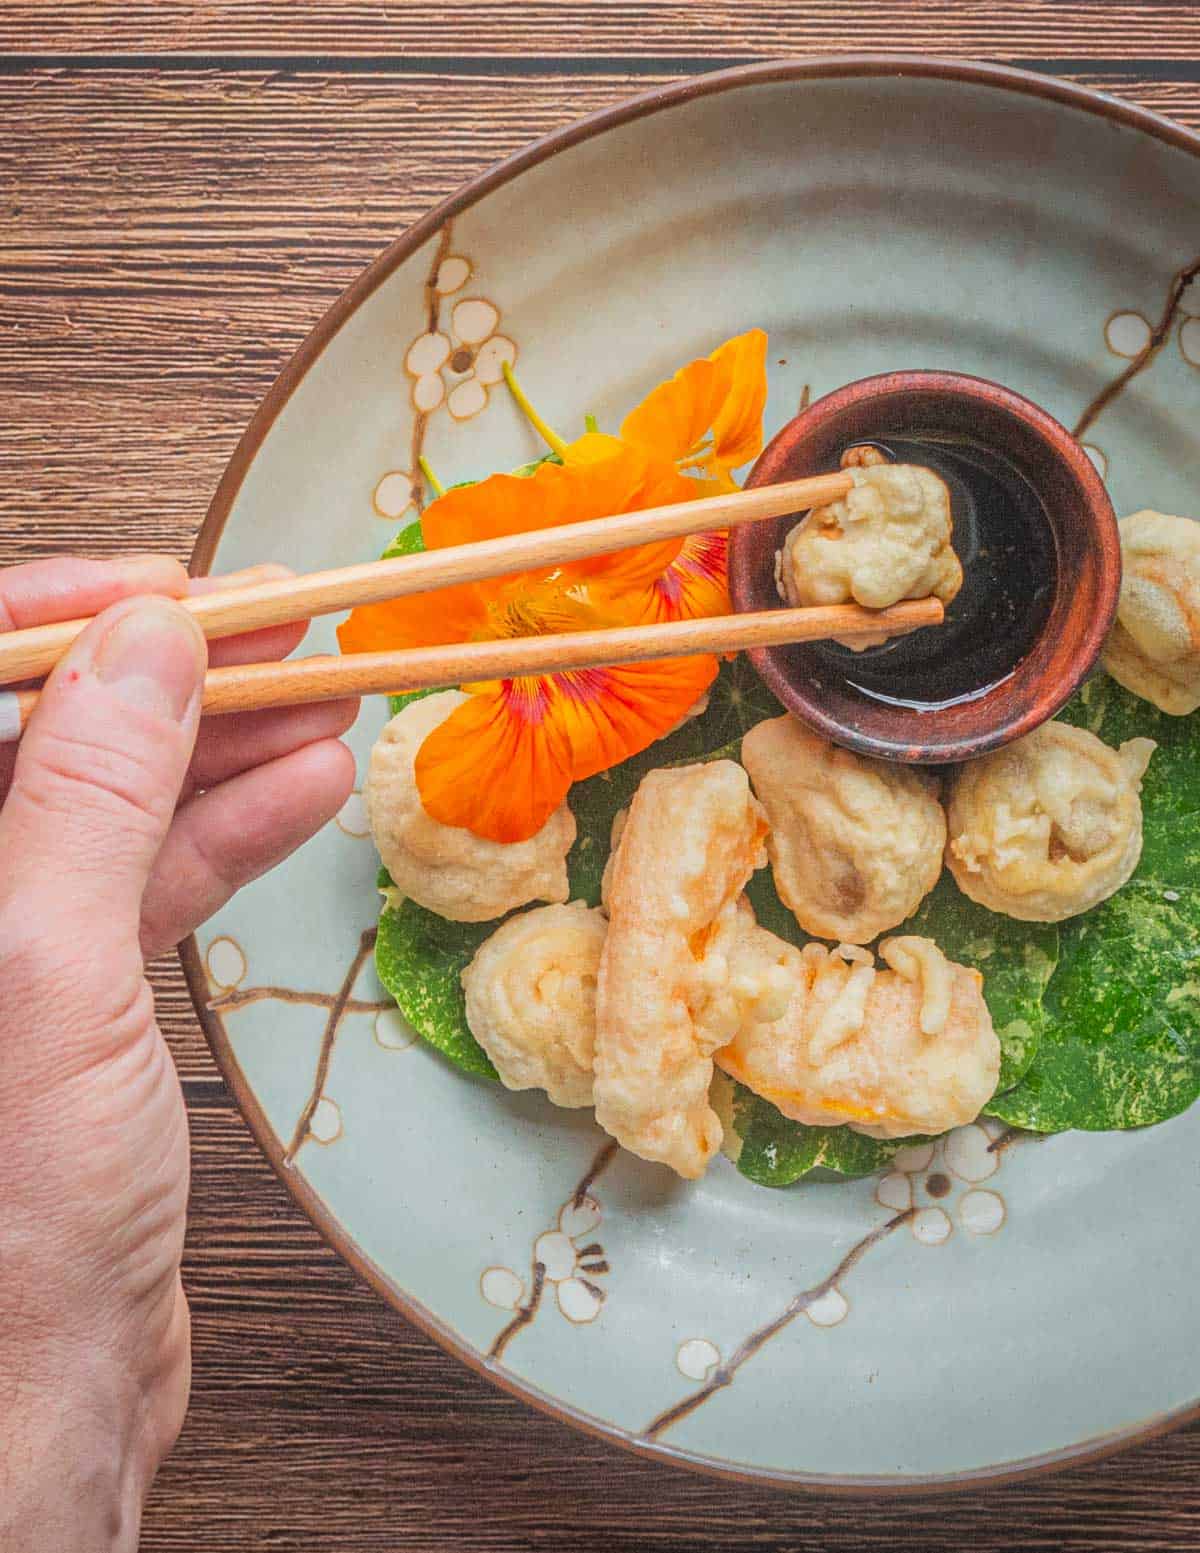 Dipping mushroom tempura into dipping sauce with chopsticks.